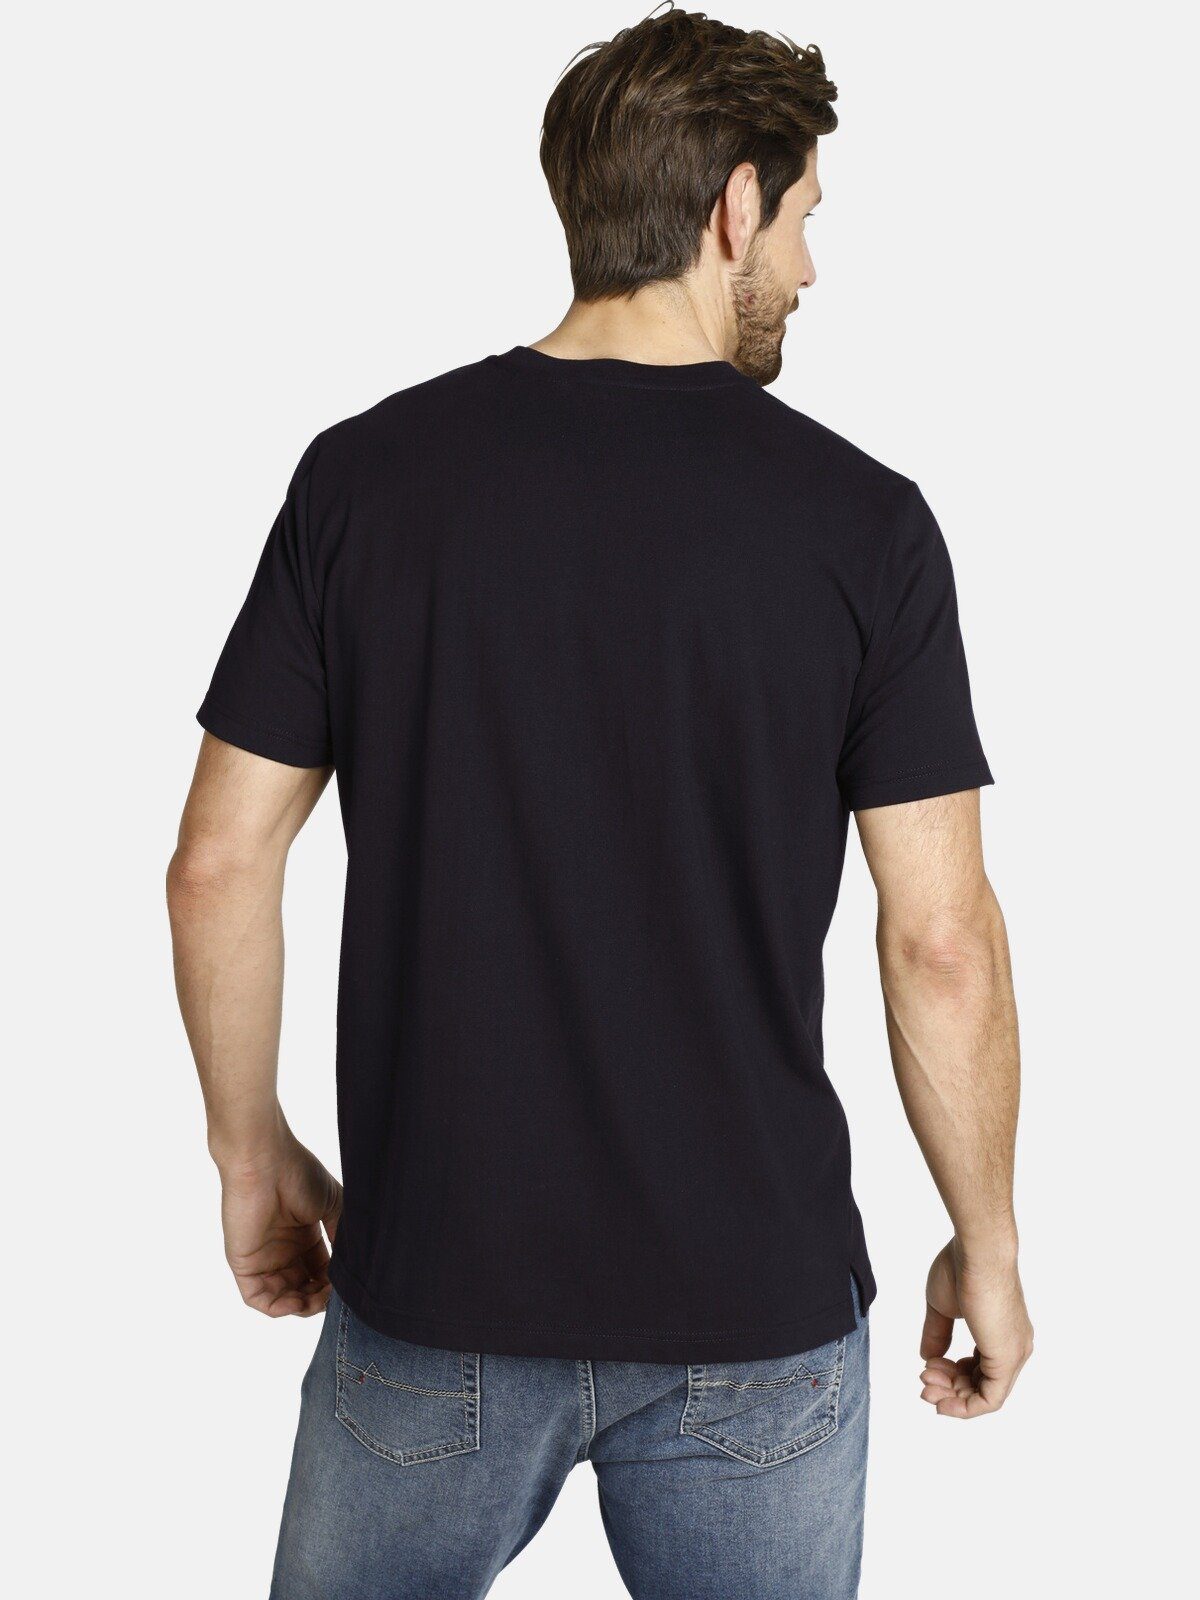 Jan Vanderstorm T-Shirt DORMOD erhabener zwei in Farben Druck